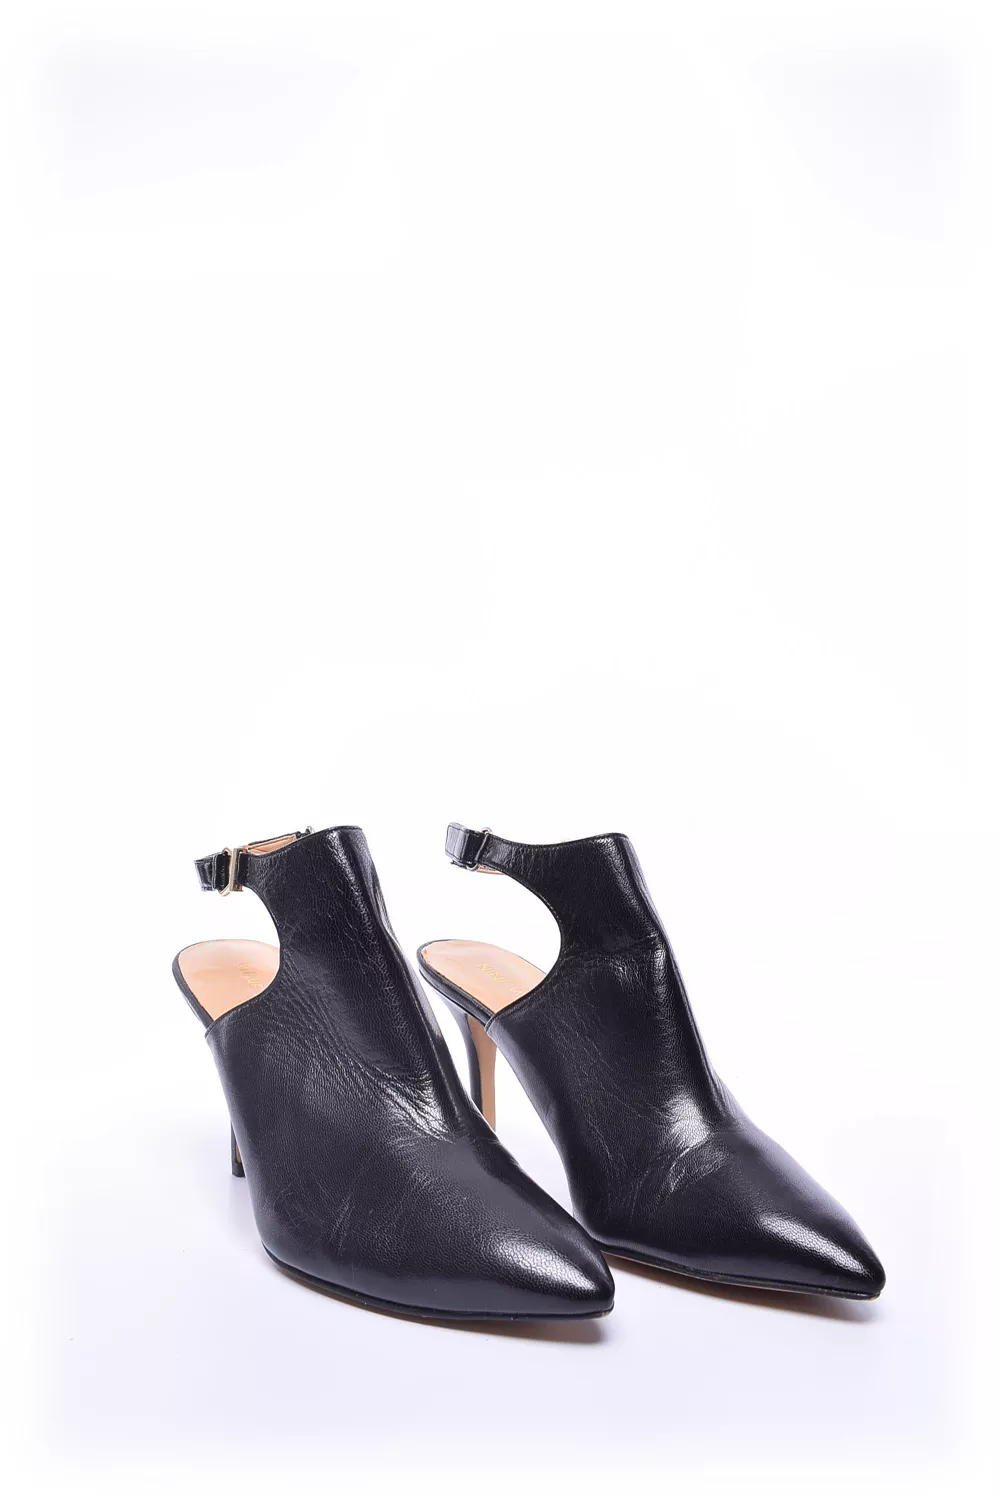 Sandale stiletto dama [2]